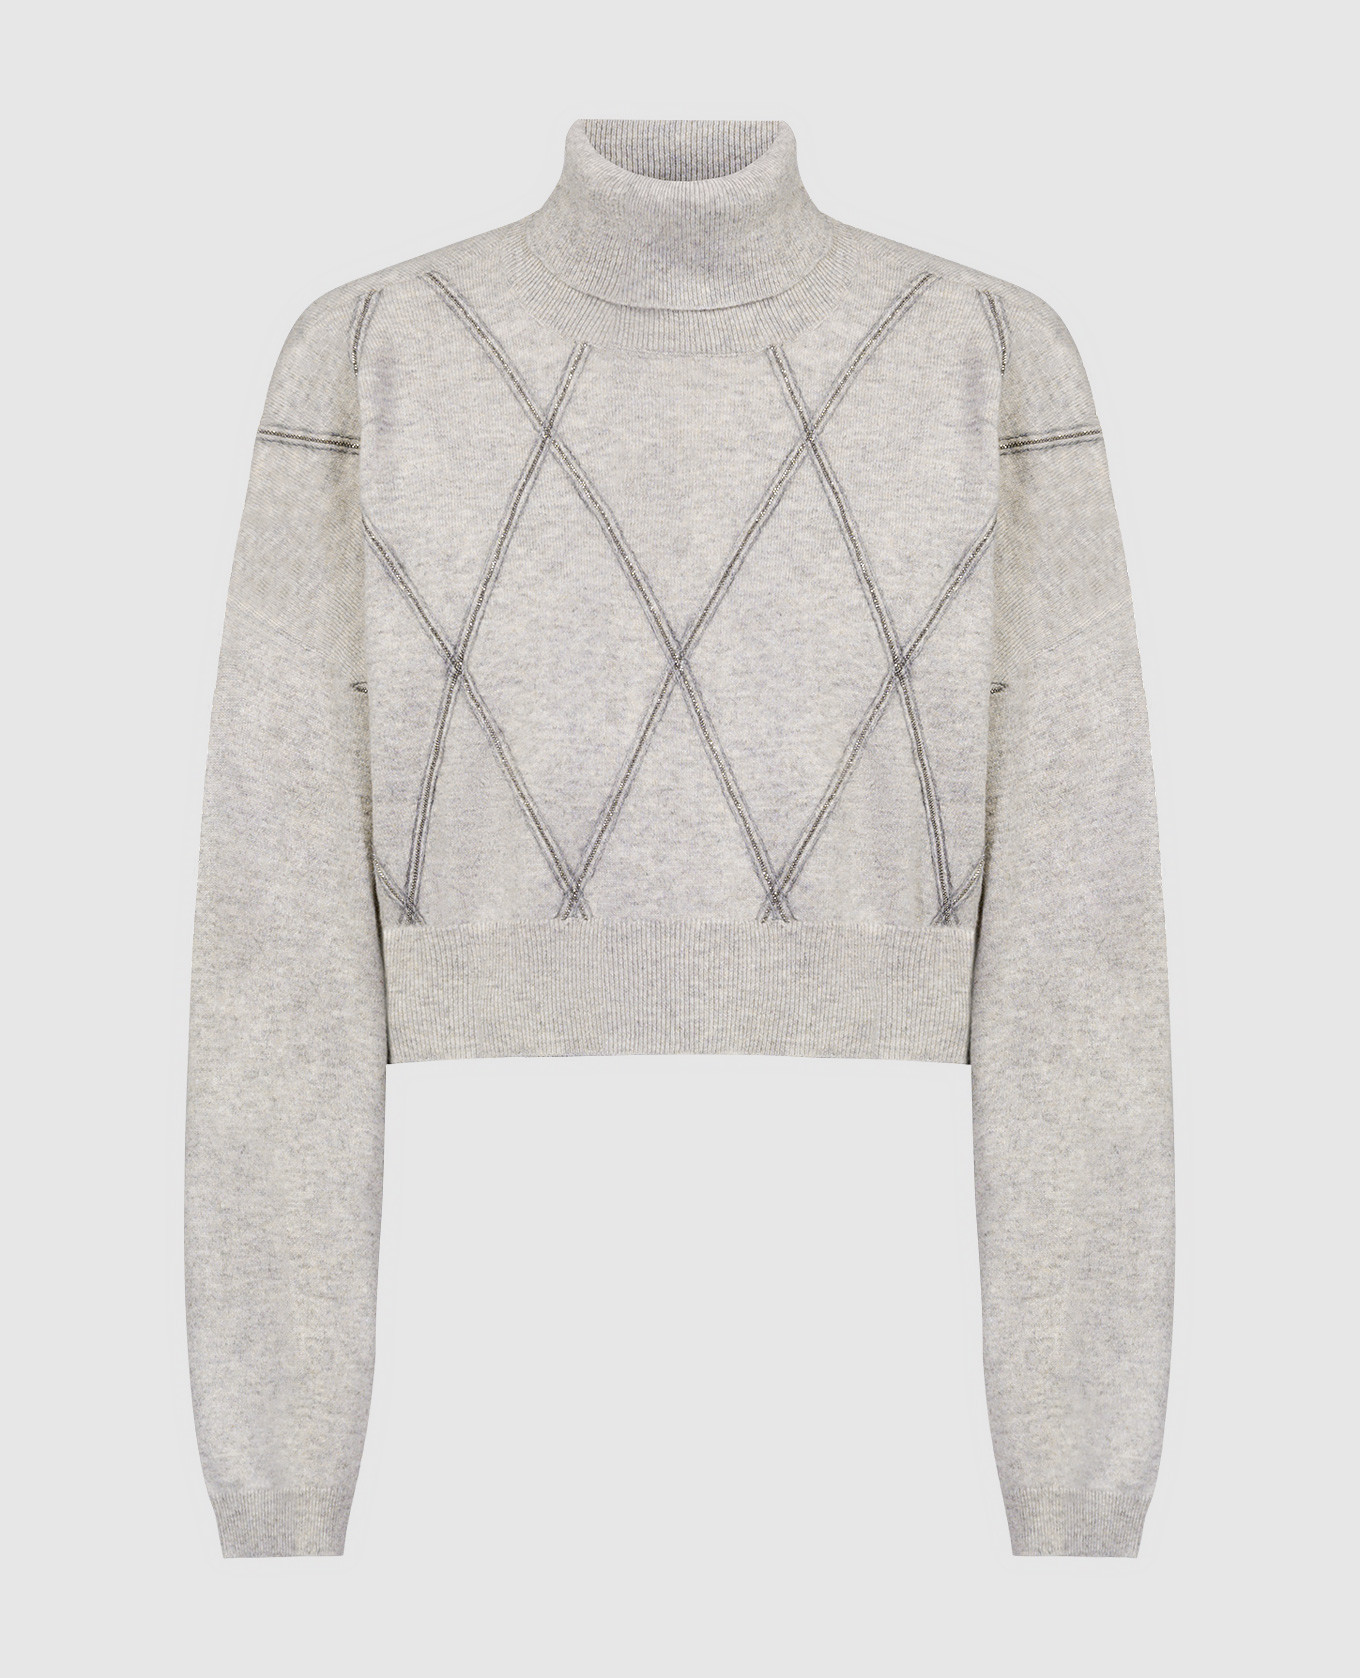 Gray sweater in a geometric pattern with a monil chain made of ekolatuny